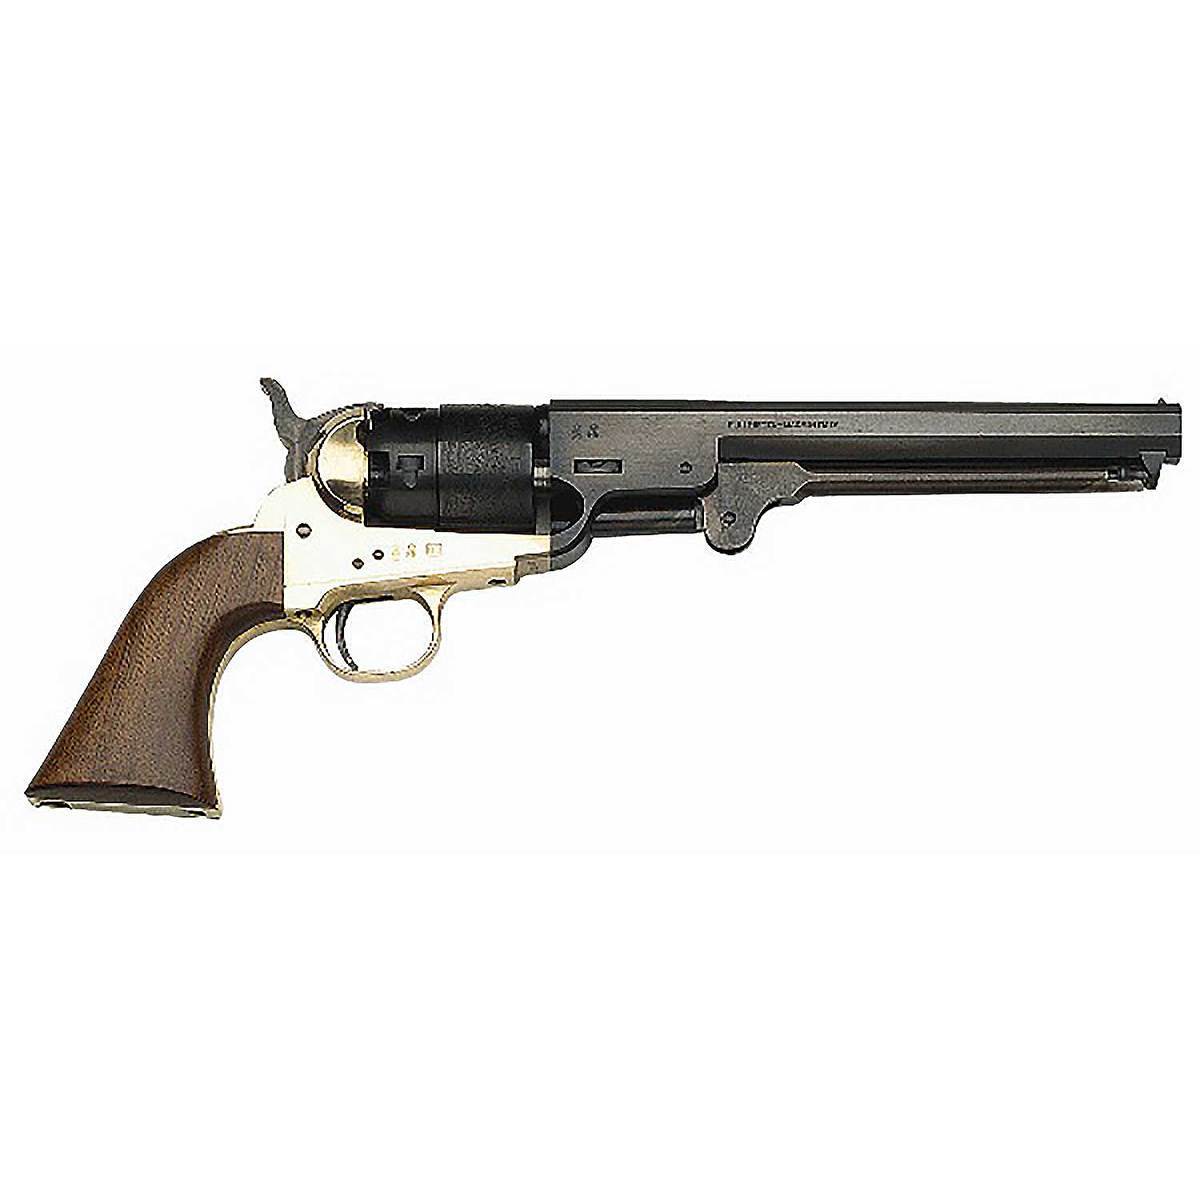 https://www.sportsmans.com/medias/traditions-1851-navy-brass-44cal-redi-pak-black-powder-revolver-1164520-1.jpg?context=bWFzdGVyfGltYWdlc3w1NTgwM3xpbWFnZS9qcGVnfGFXMWhaMlZ6TDJneU55OW9OVFV2T1Rrd05EUTJNVGMwTWpFeE1DNXFjR2N8NDFkMWJhZjg0MjZhMzU4YjM2NzNiYjBmYzVmYzdhY2ViMzFlN2Q1ZjA4YTJhODkzYzQzNjk0YzEyZmIxOTcxYg